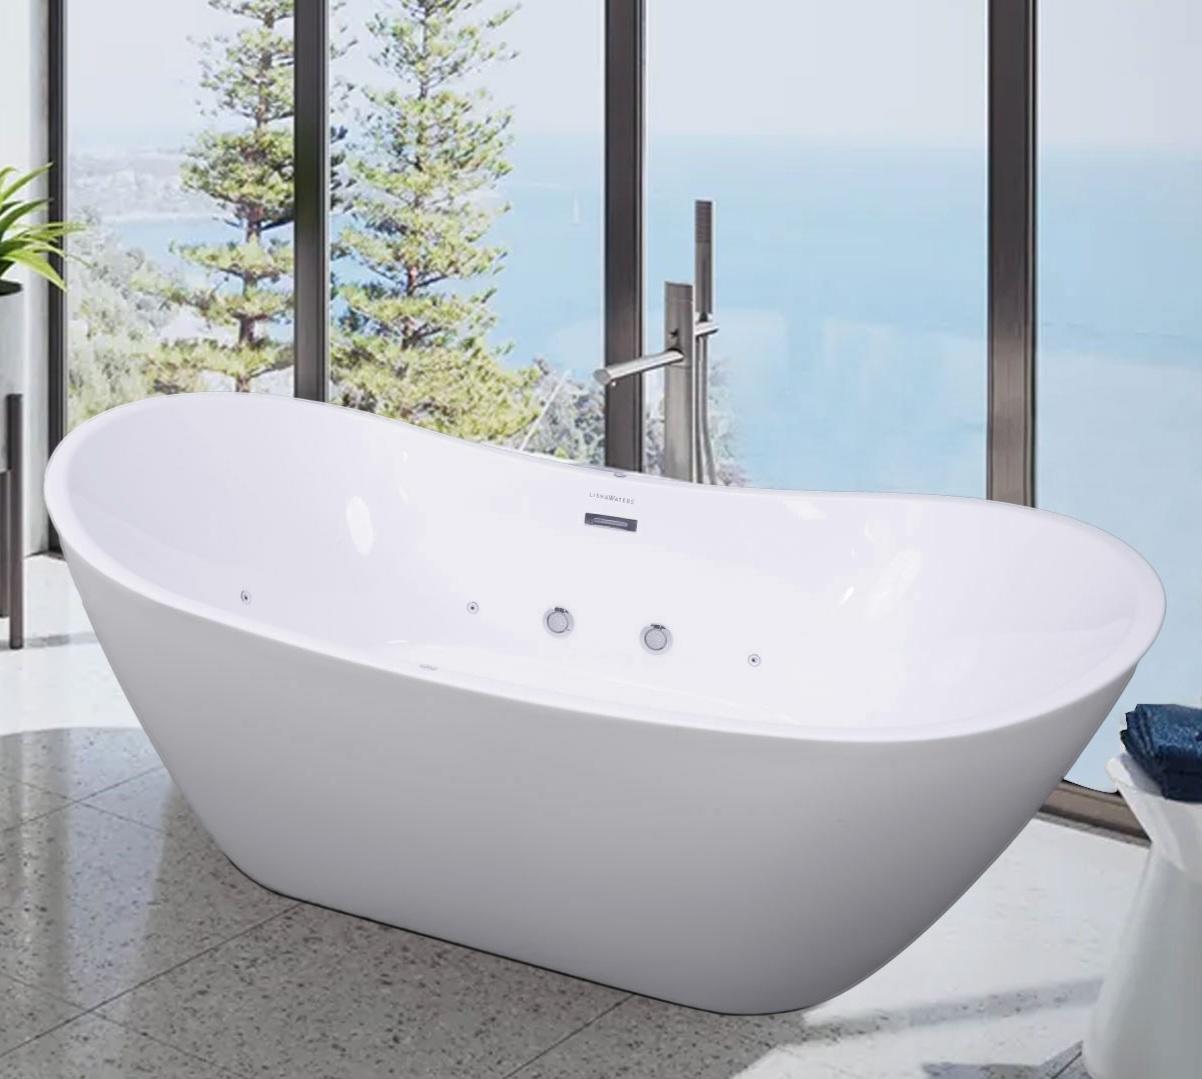 Main grace whirlpool freestanding bath tub